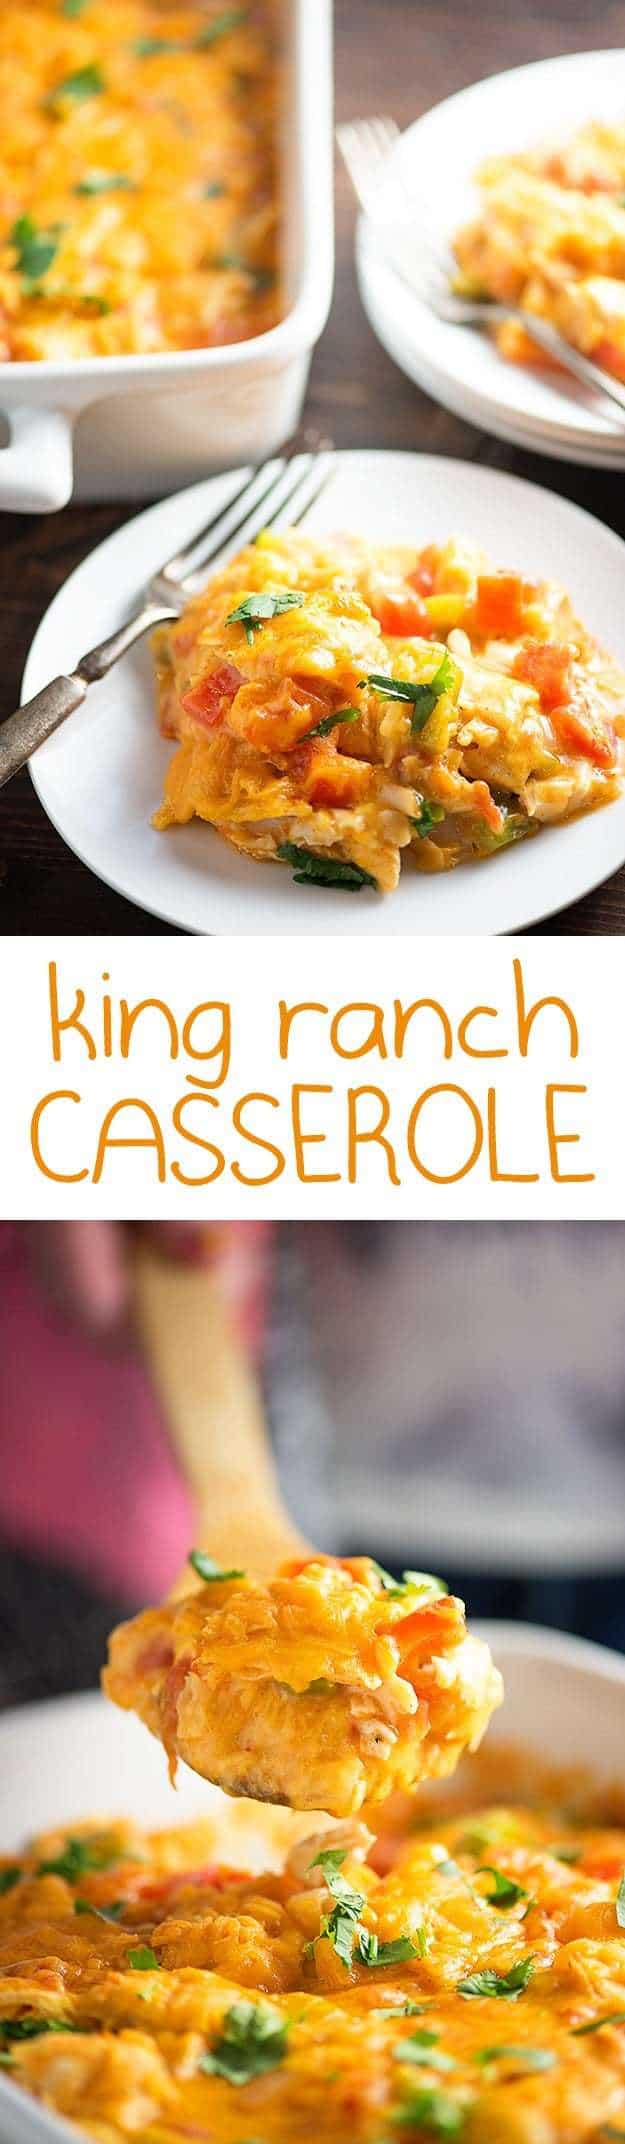 King Ranch Casserole Recipe - A classic casserole favorite!